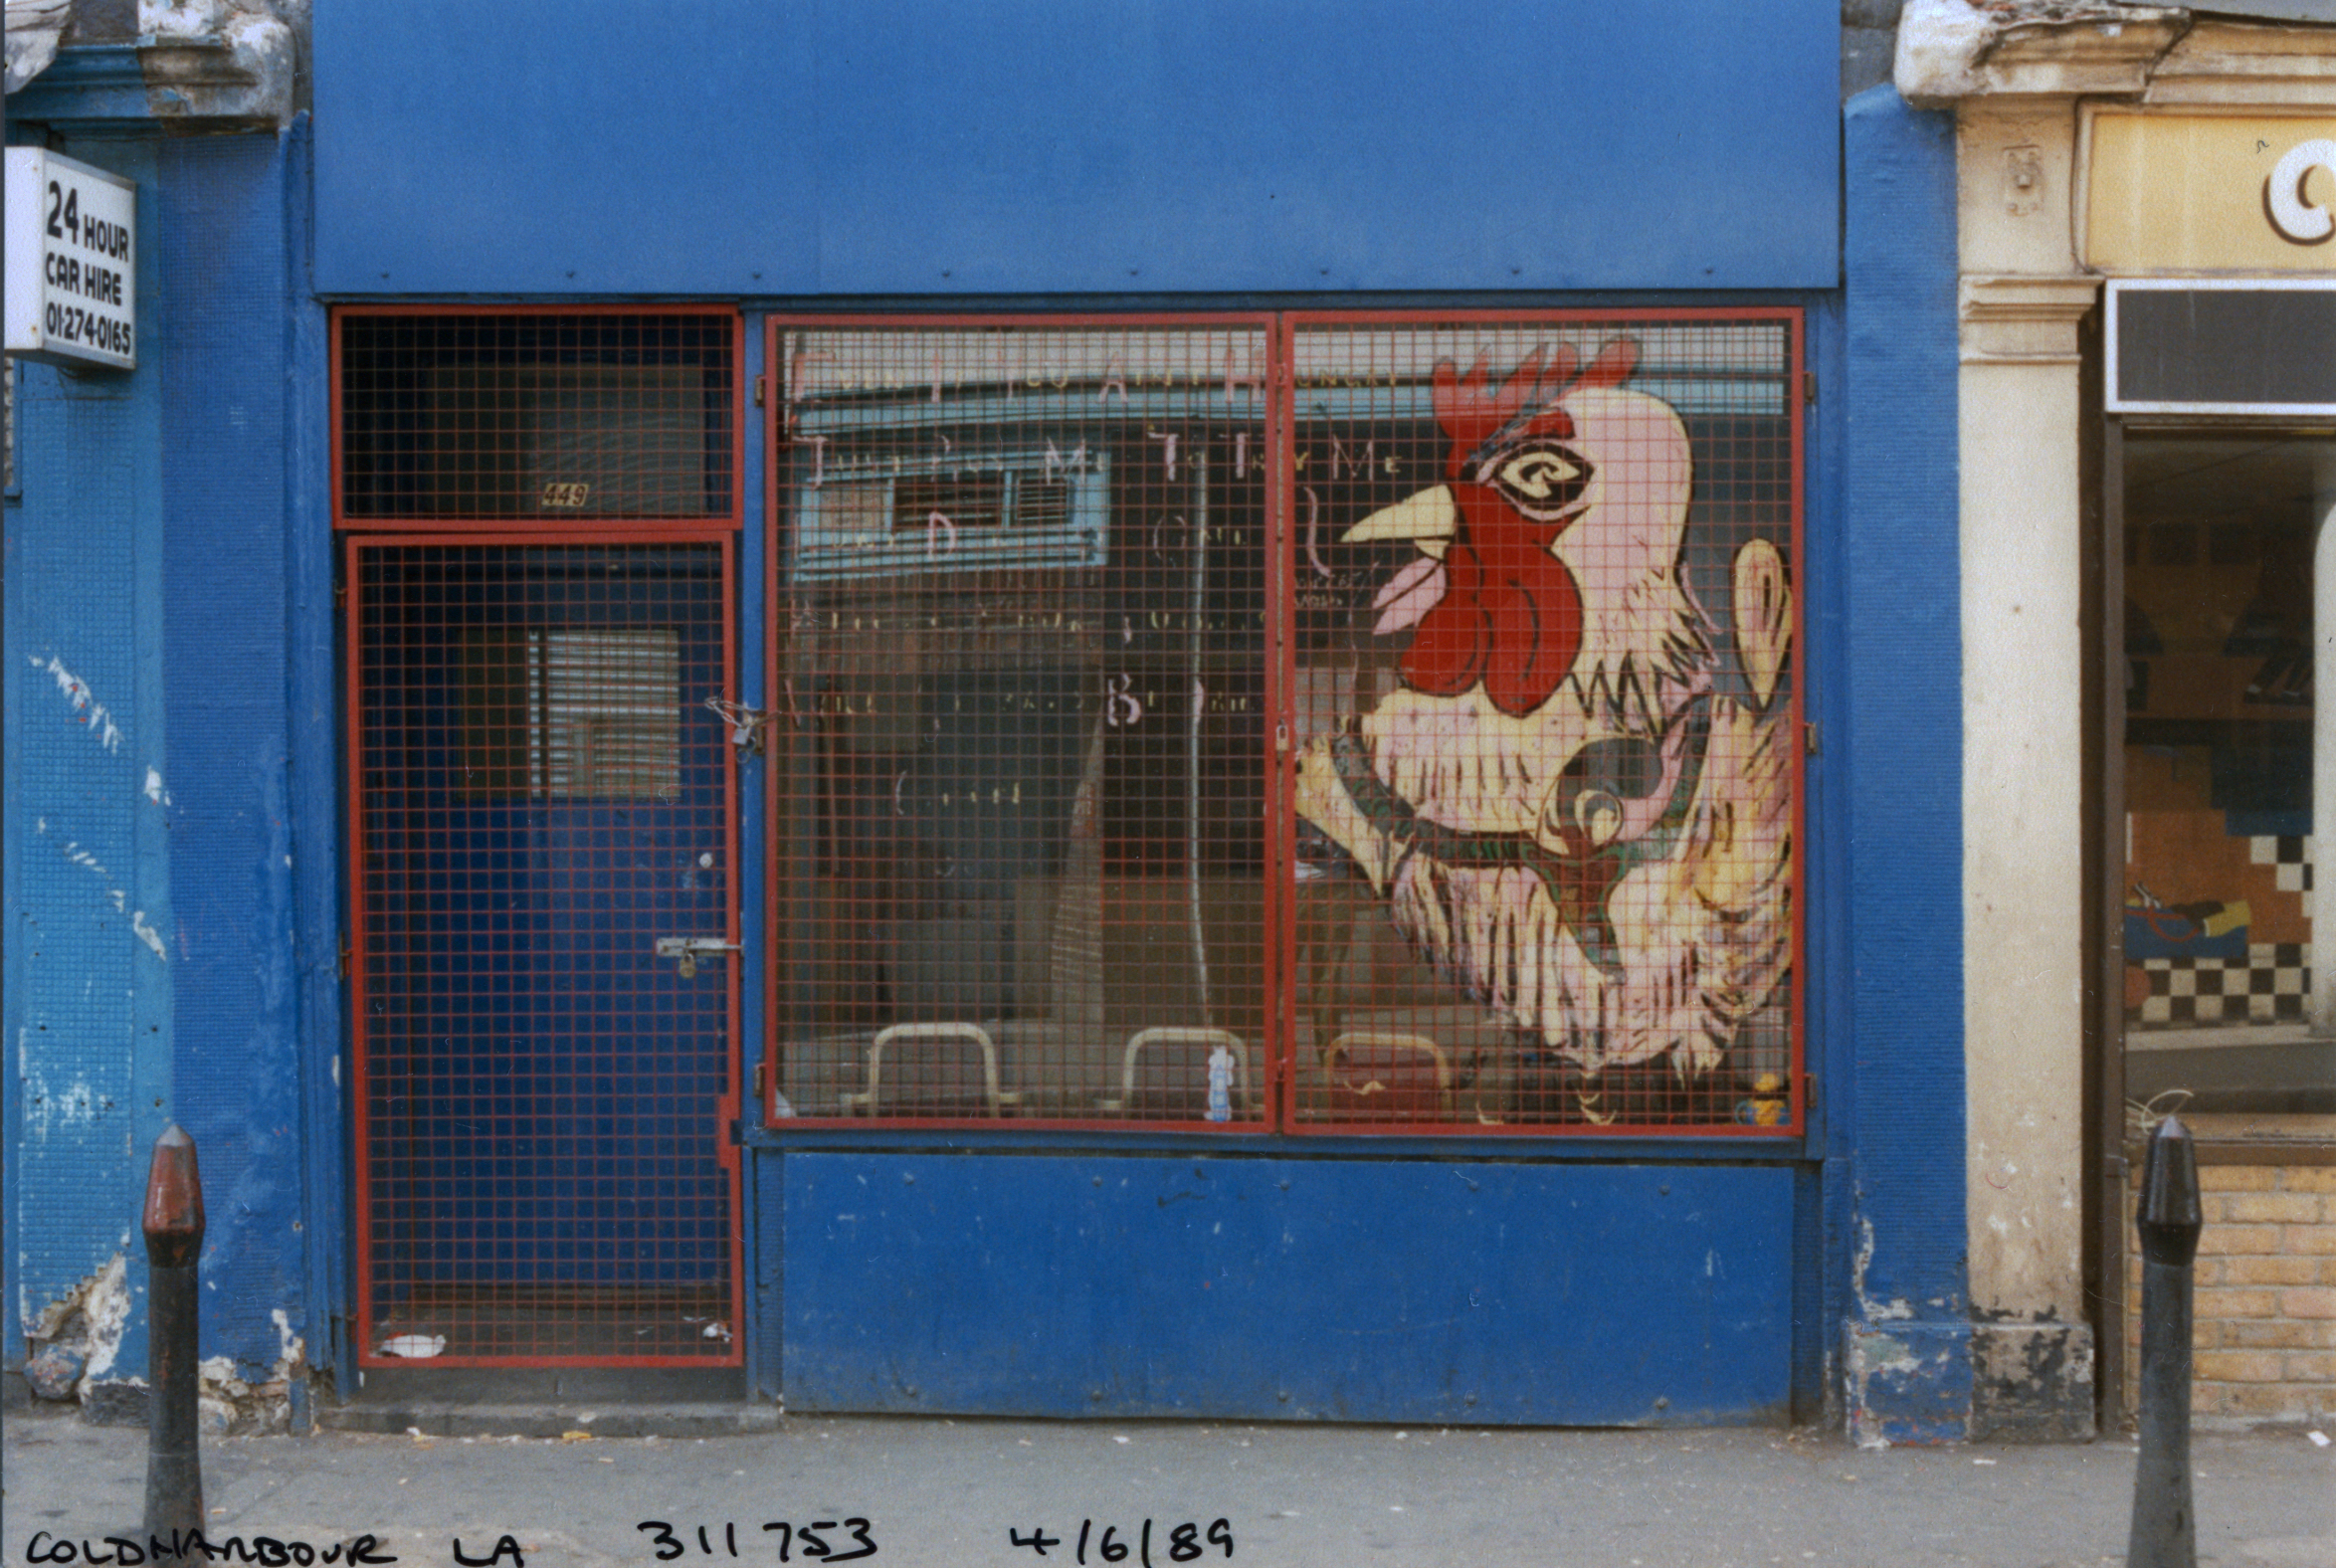 Coldharbour Lane, Brixton, 1989, Lambeth chicken